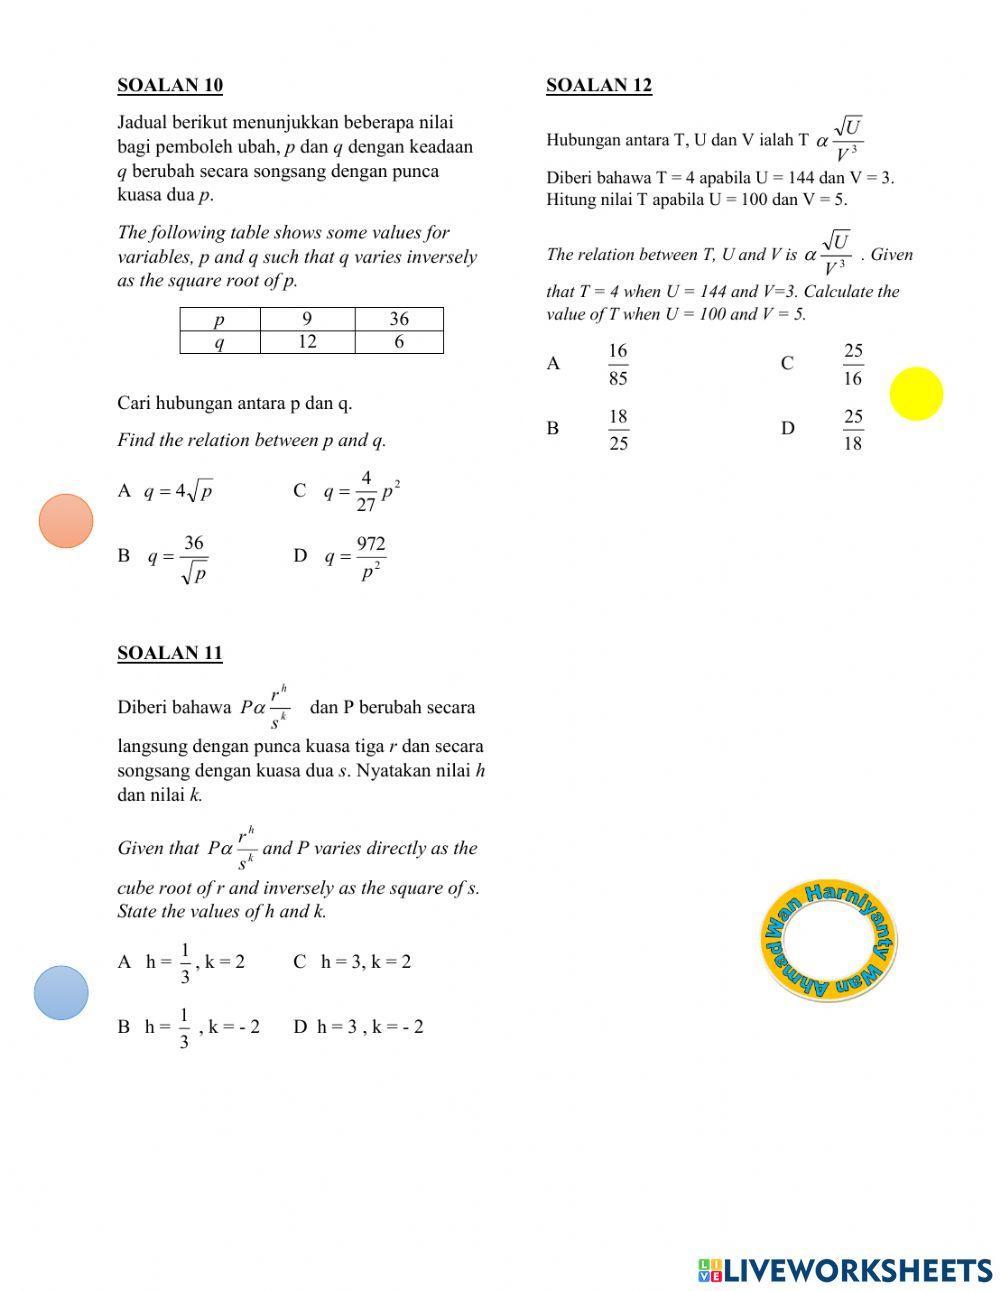 Bab 1 ubahan Matematik Tingkatan 5